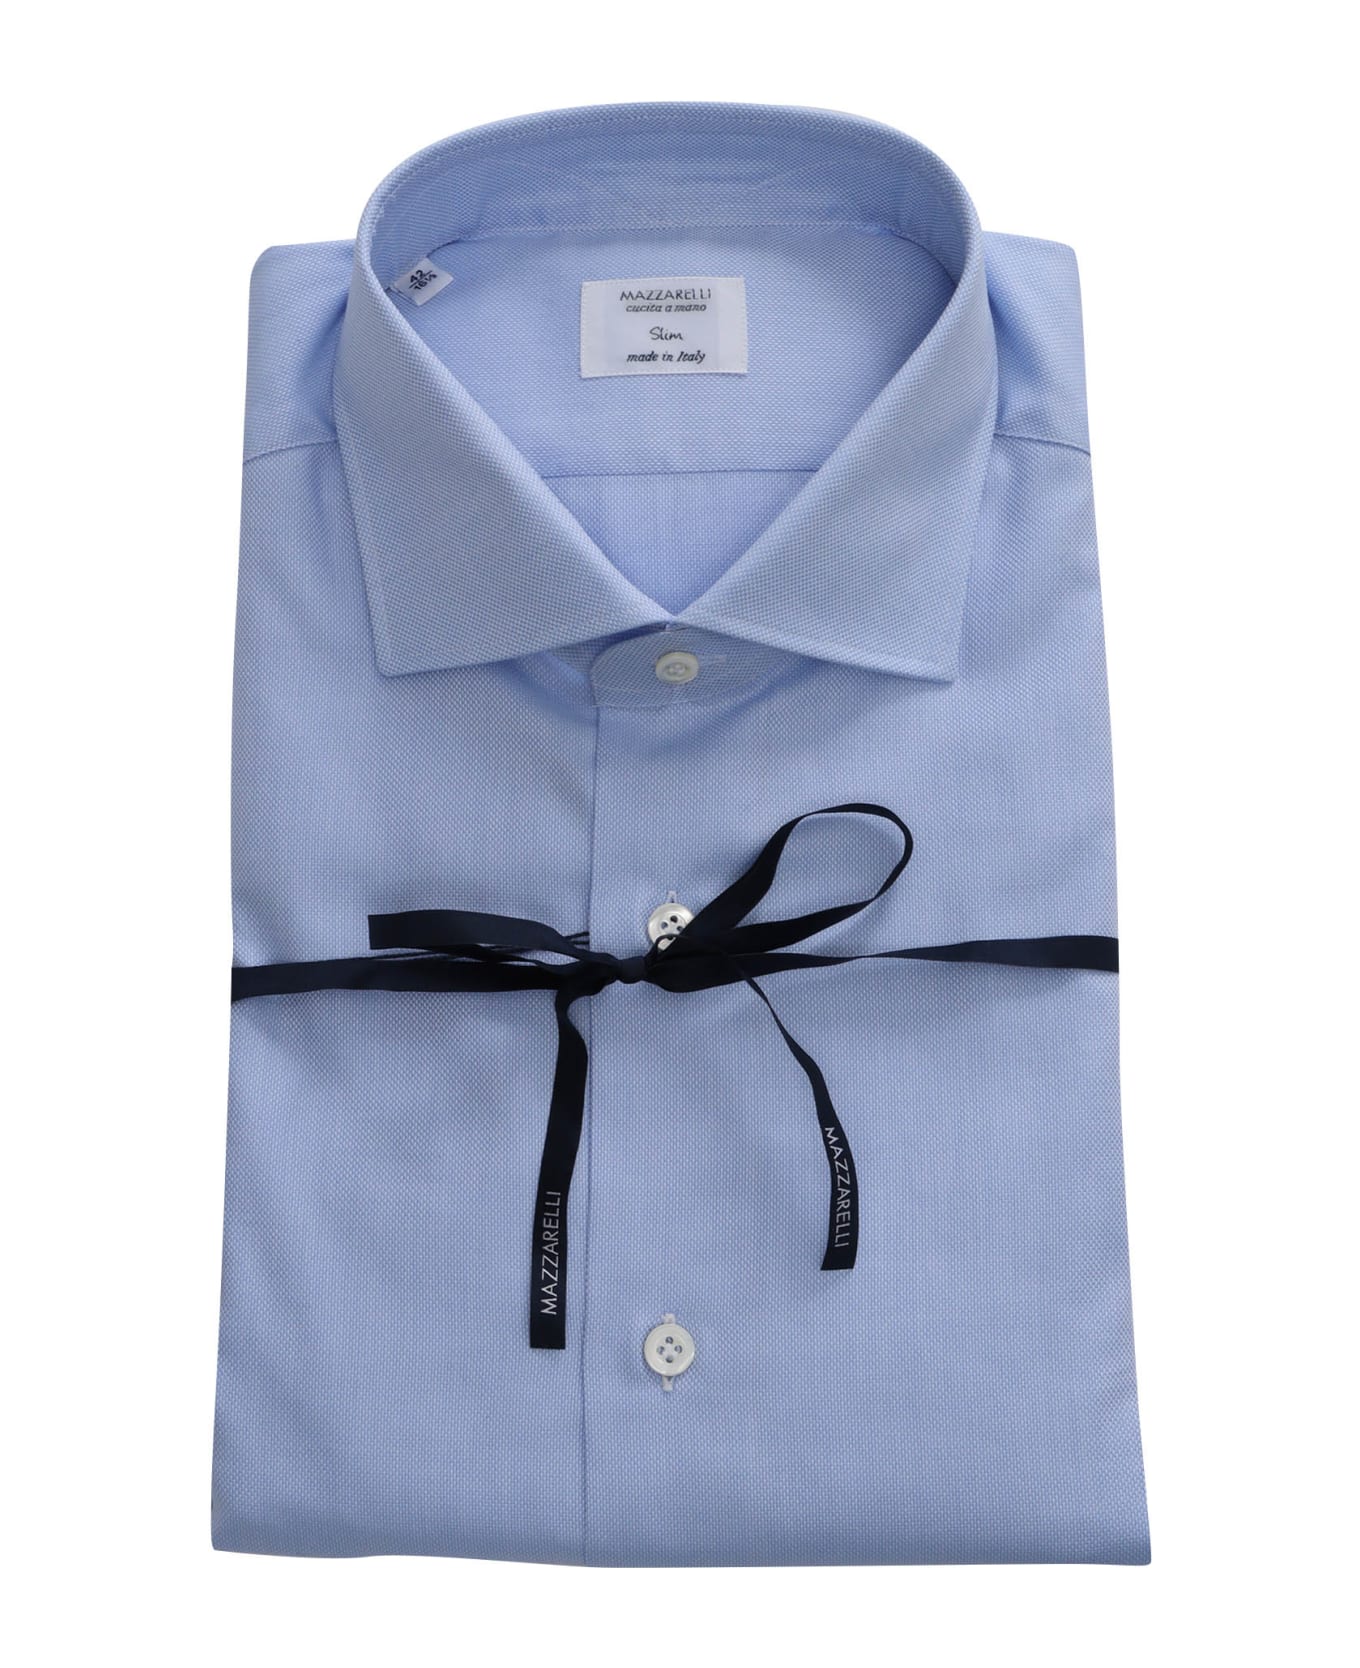 Mazzarelli Slim Fit Oxford Shirt - LIGHT BLUE